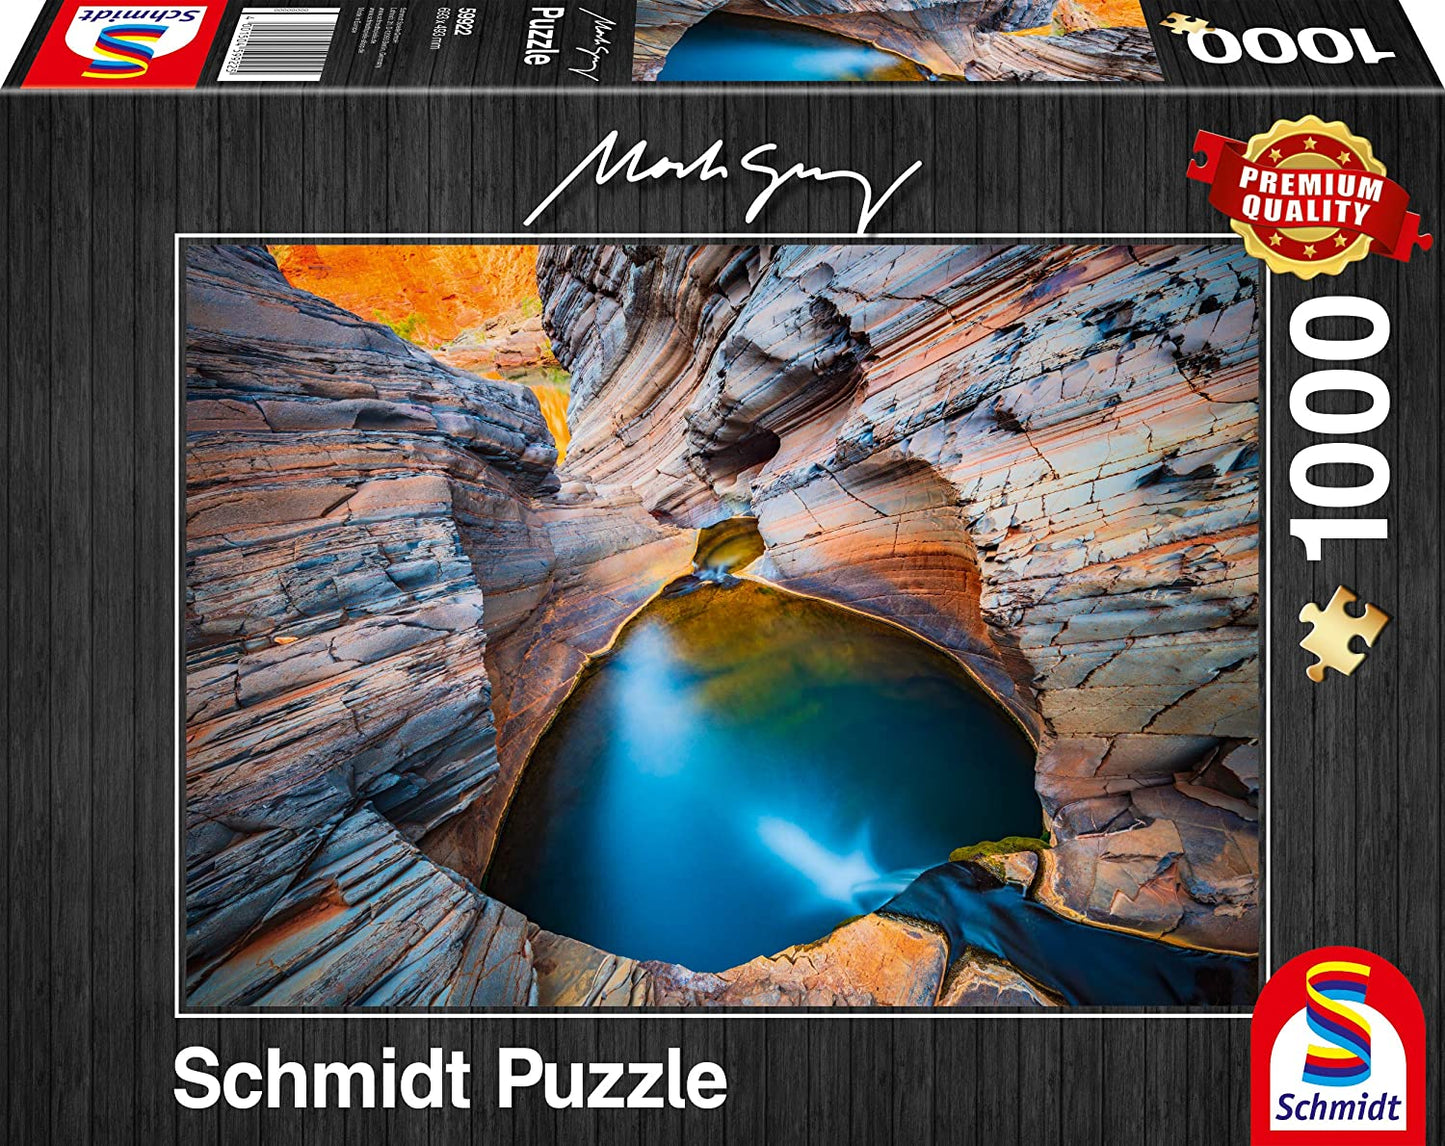 Schmidt - Mark Gray - Indigo - 1000 Piece Jigsaw Puzzle